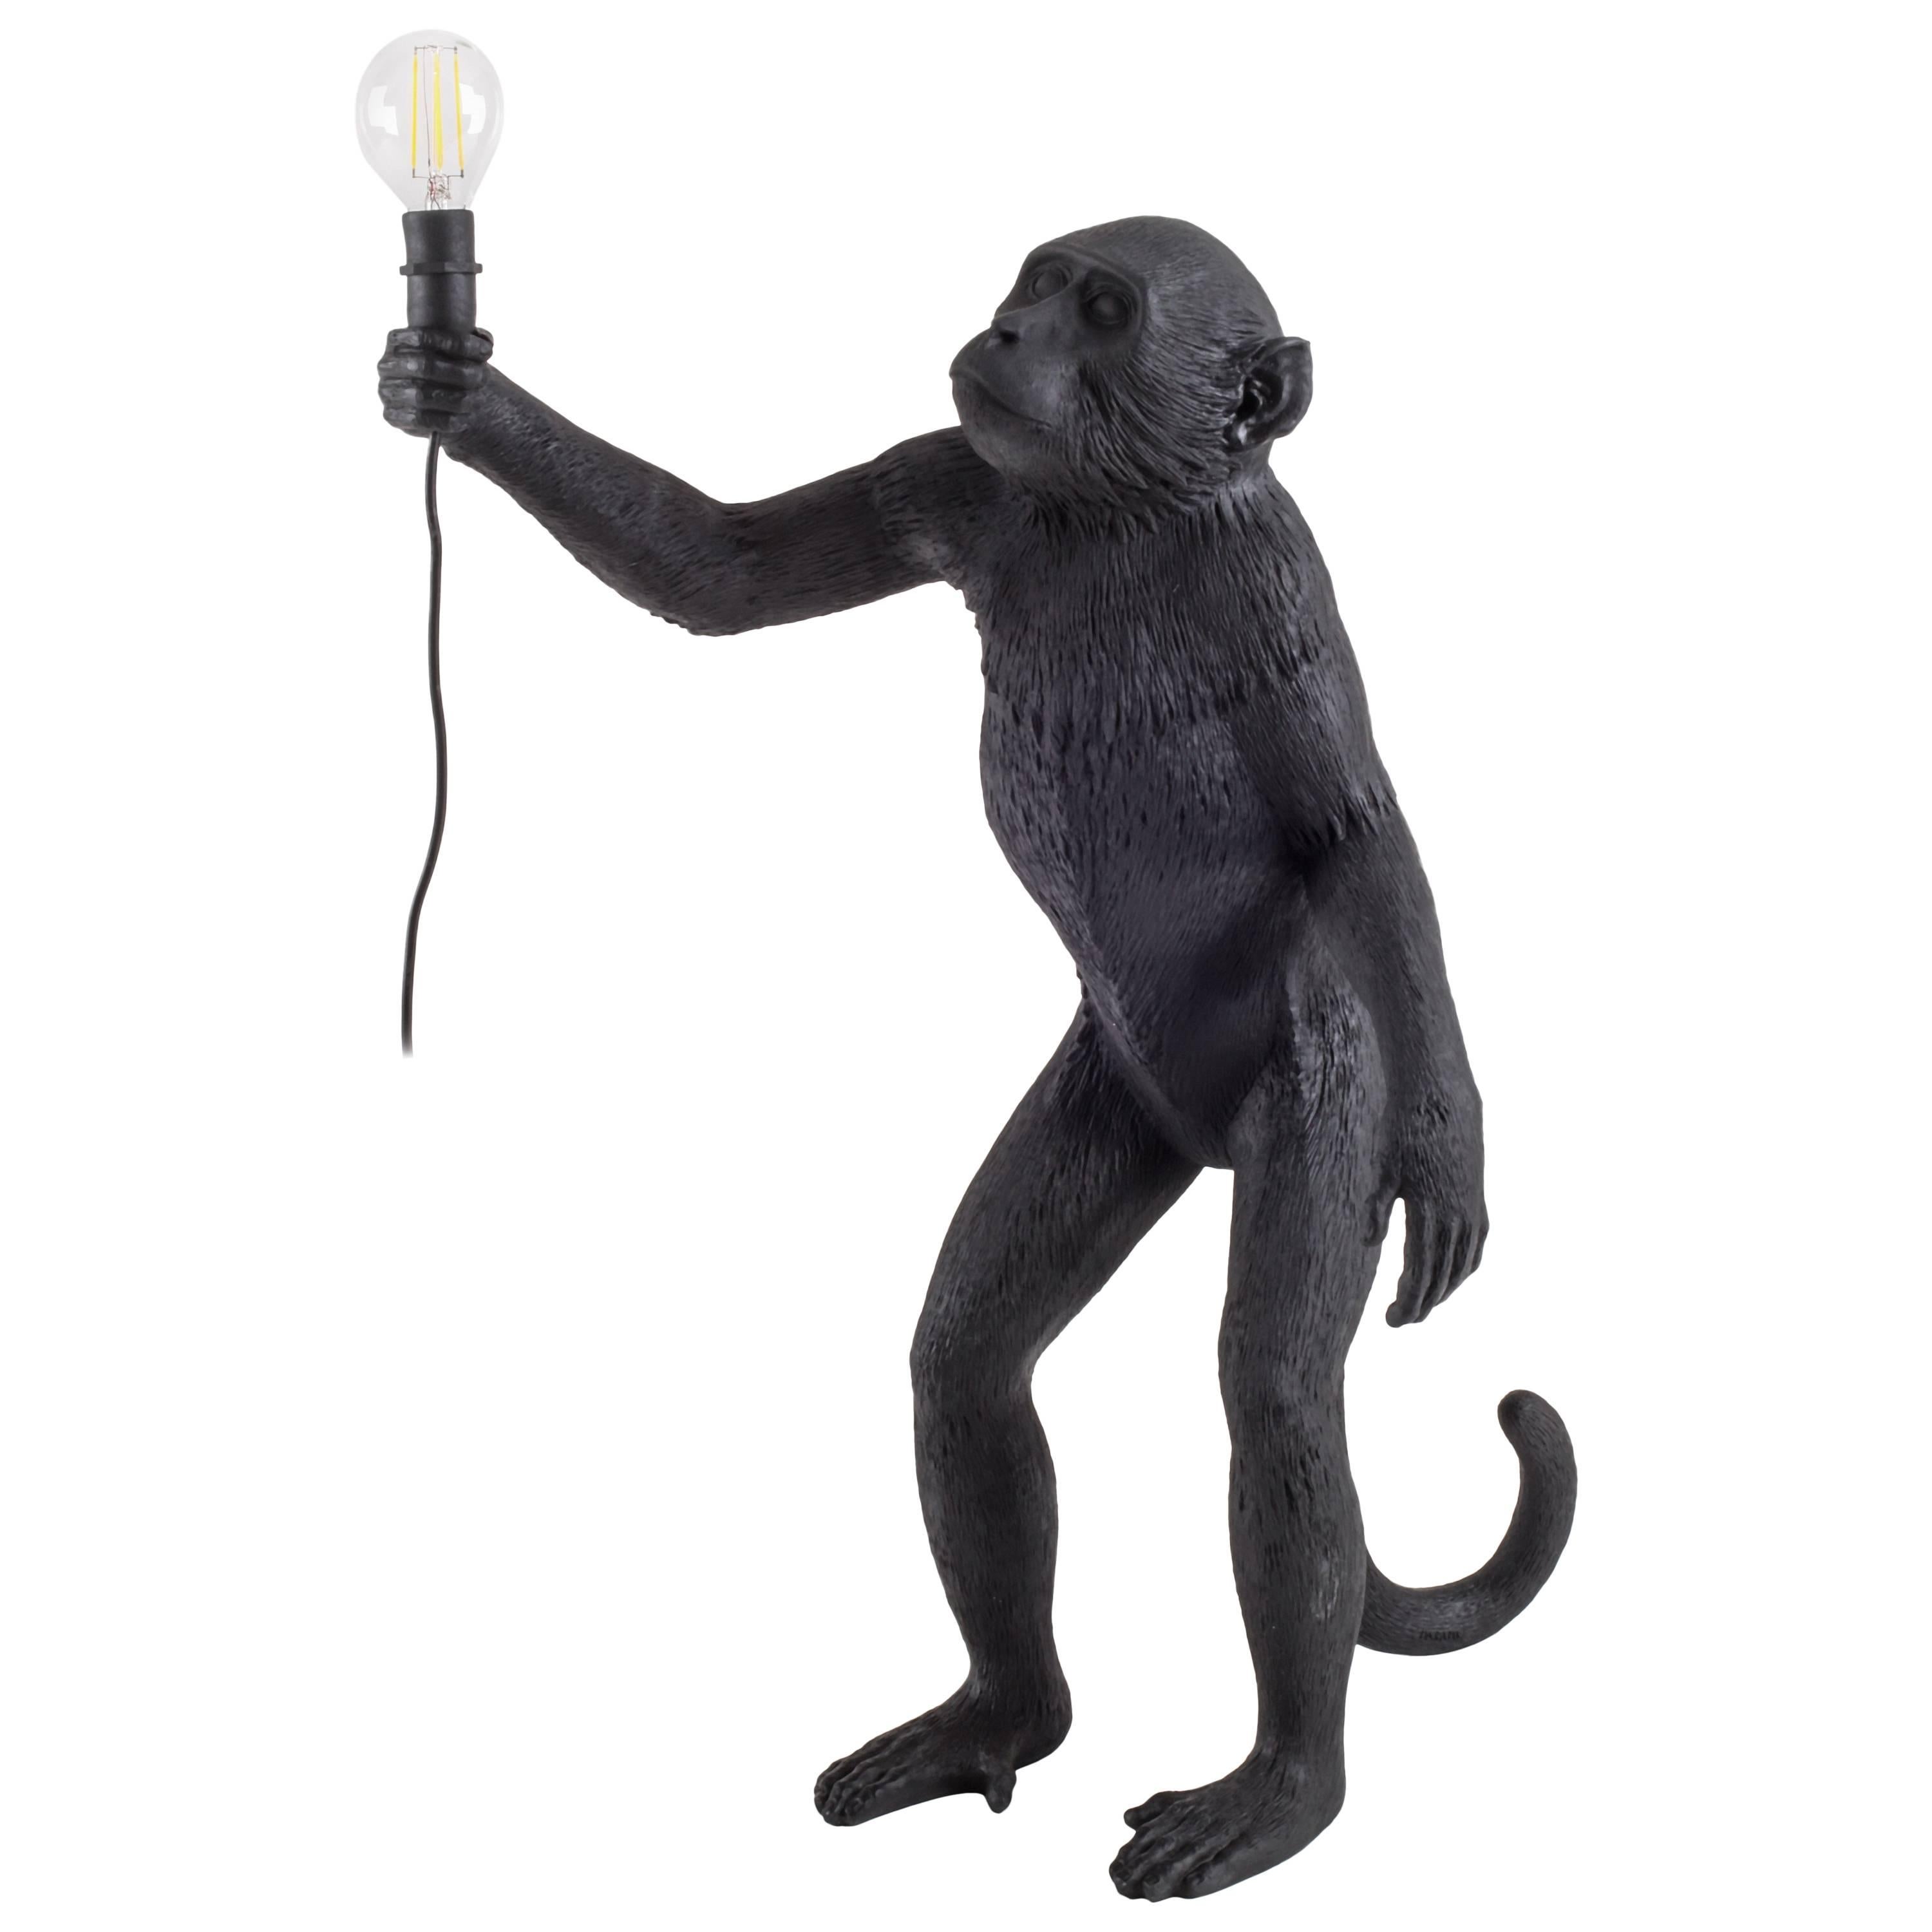 Seletti "Monkey Lamp-Outdoor-Us" Resin Lamp, Standing